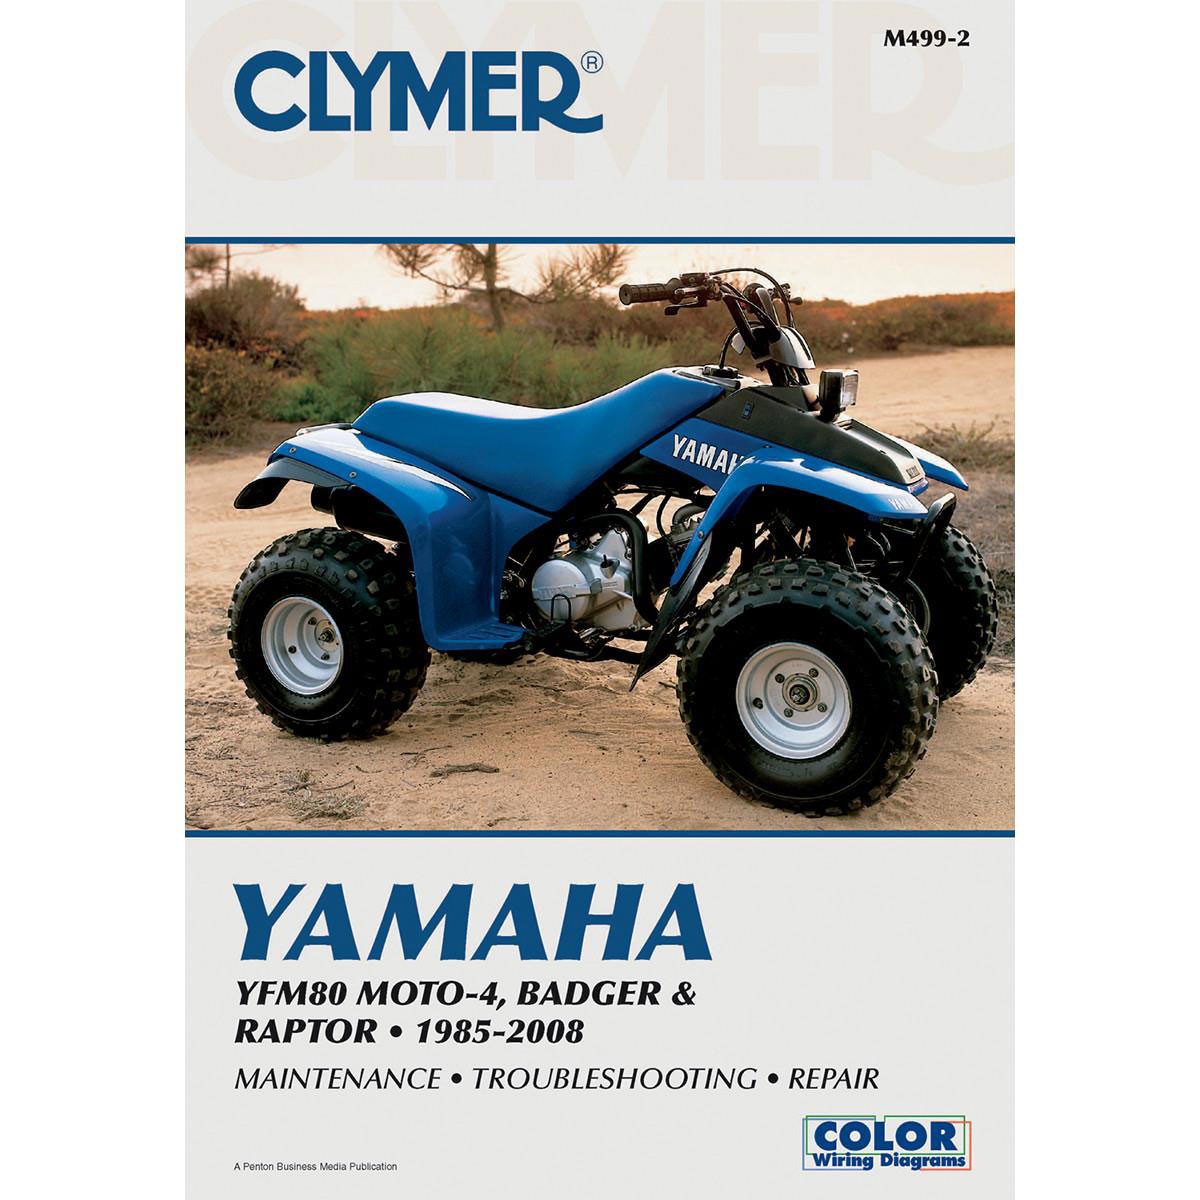 Clymer Repair Manual Yamaha YFM 80 Moto4/Badger/Raptor